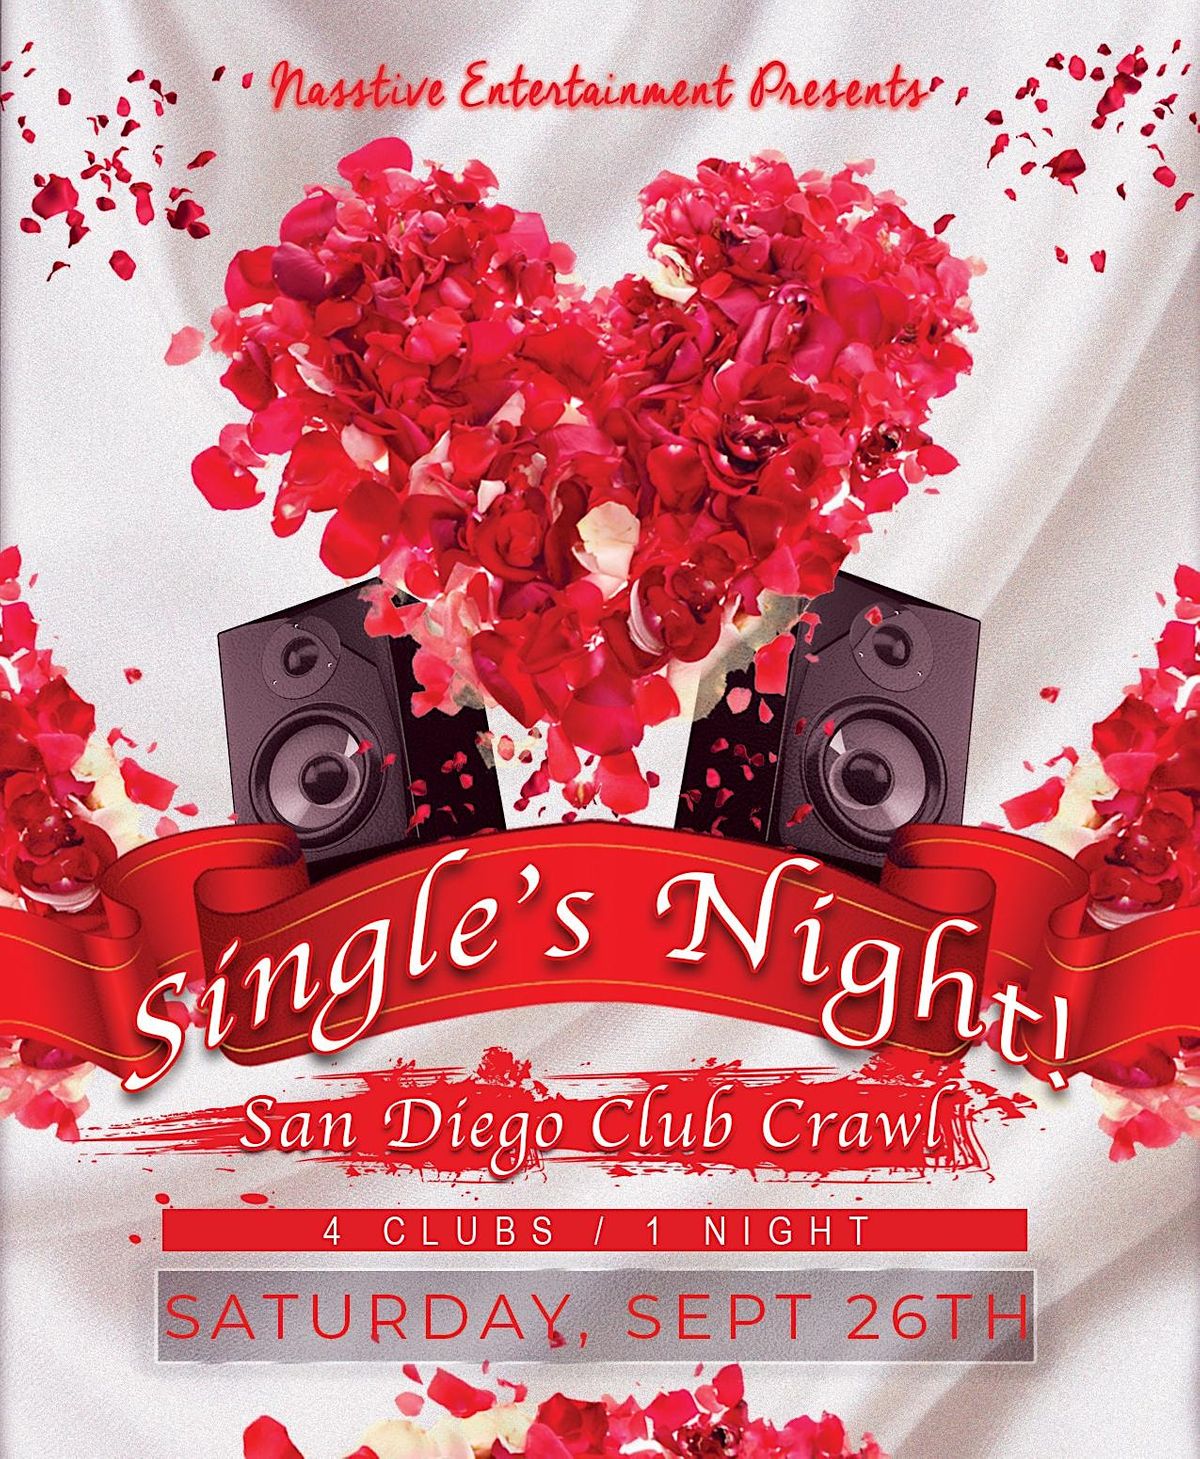 SINGLE'S NIGHT! Club crawl and social mixer - Saturday, December 9th!